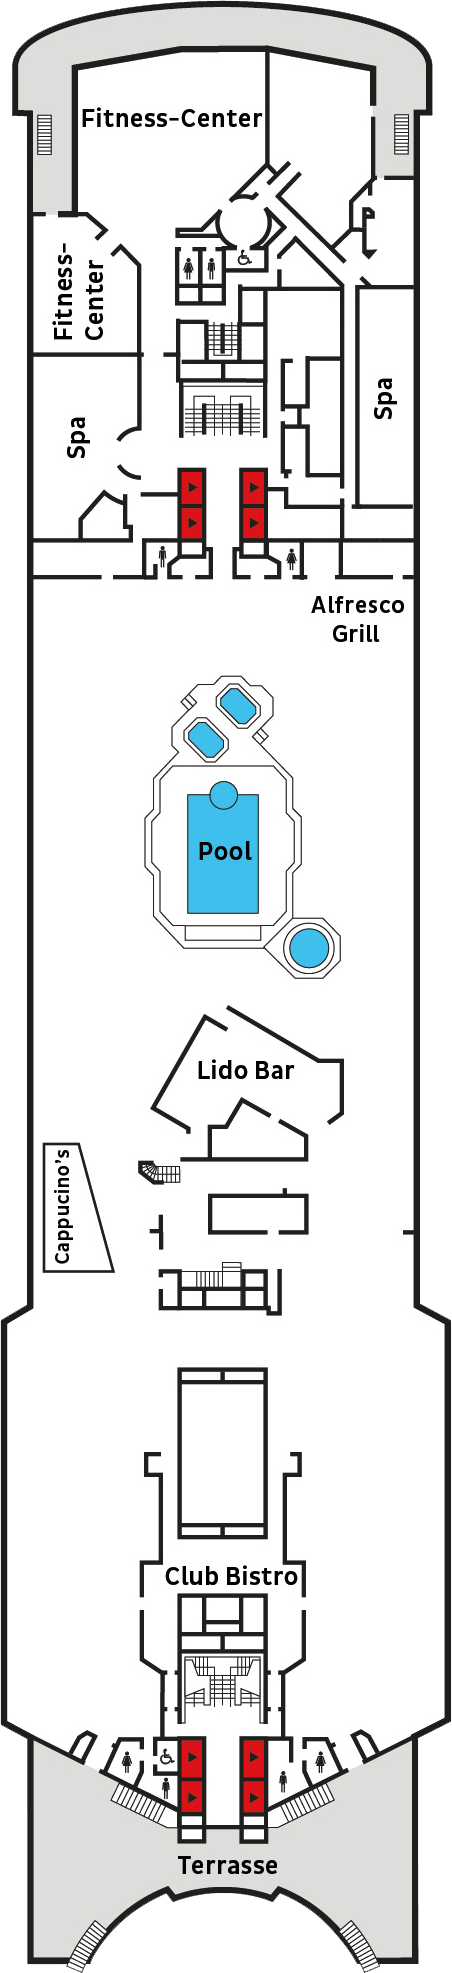 Lido Deck (Deck Nr. 11)